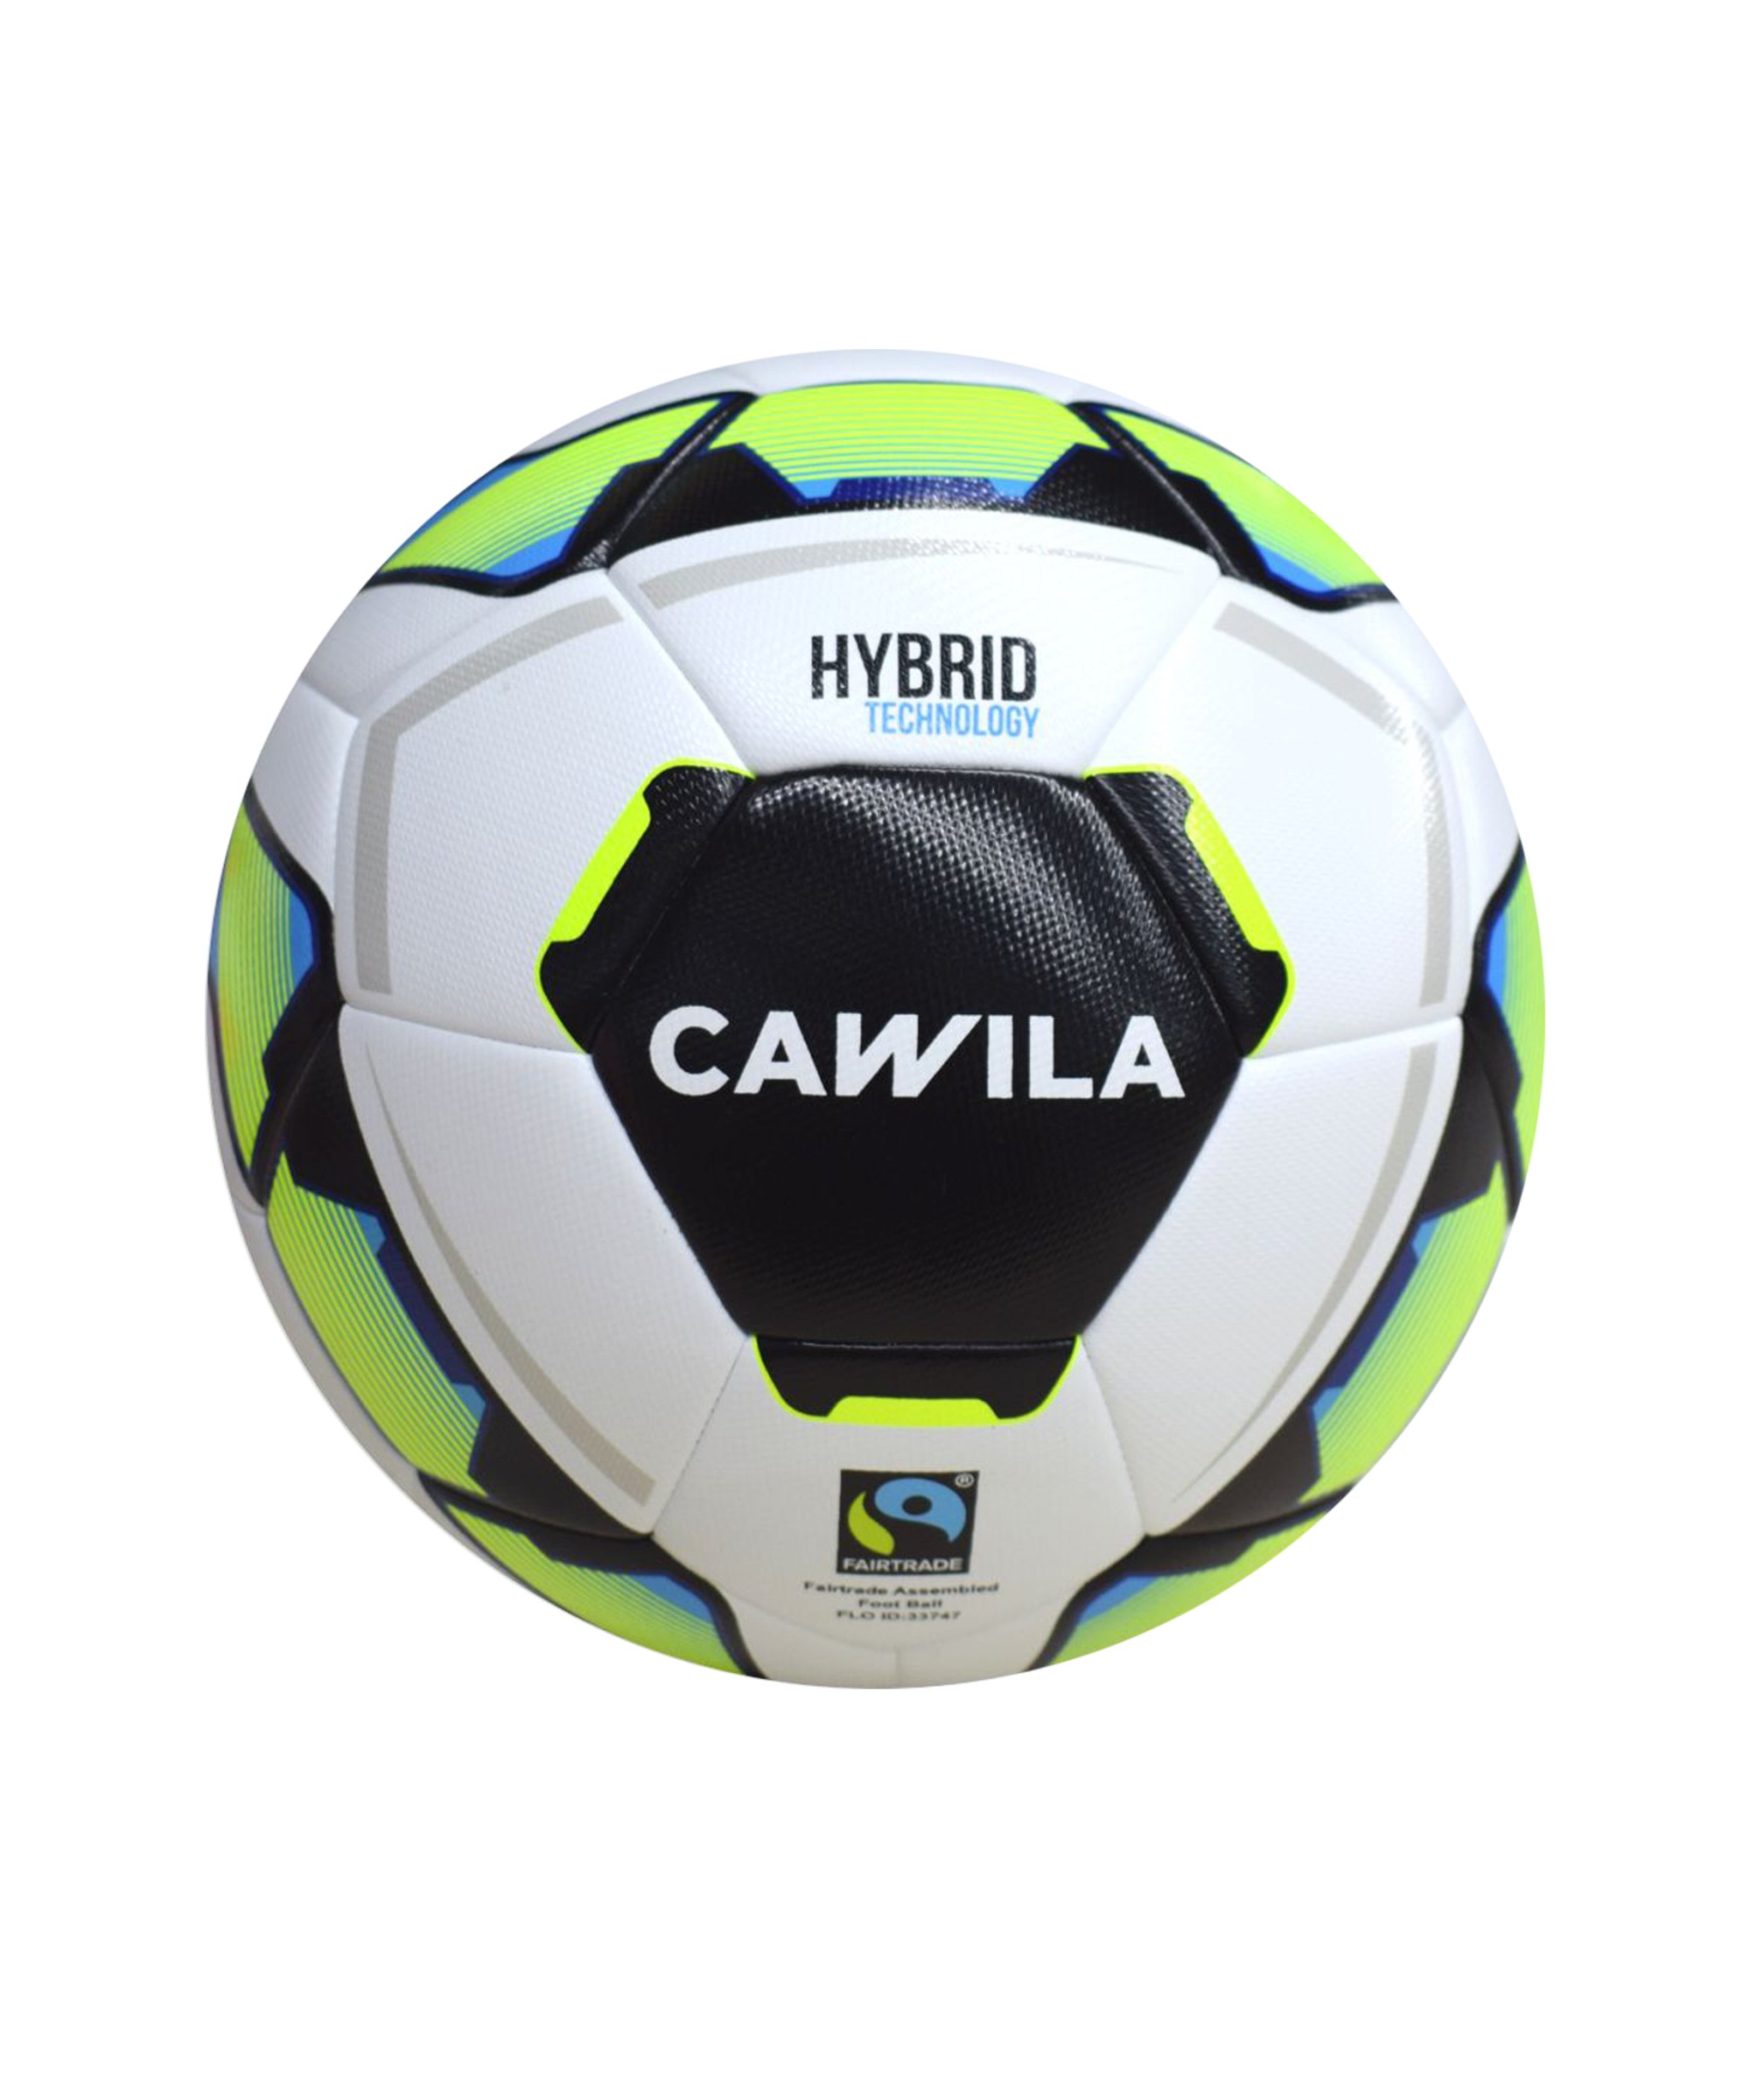 Cawila MISSION HYBRID X-LITE Fairtrade 290g Trainingsball Gr. 5 - weiss